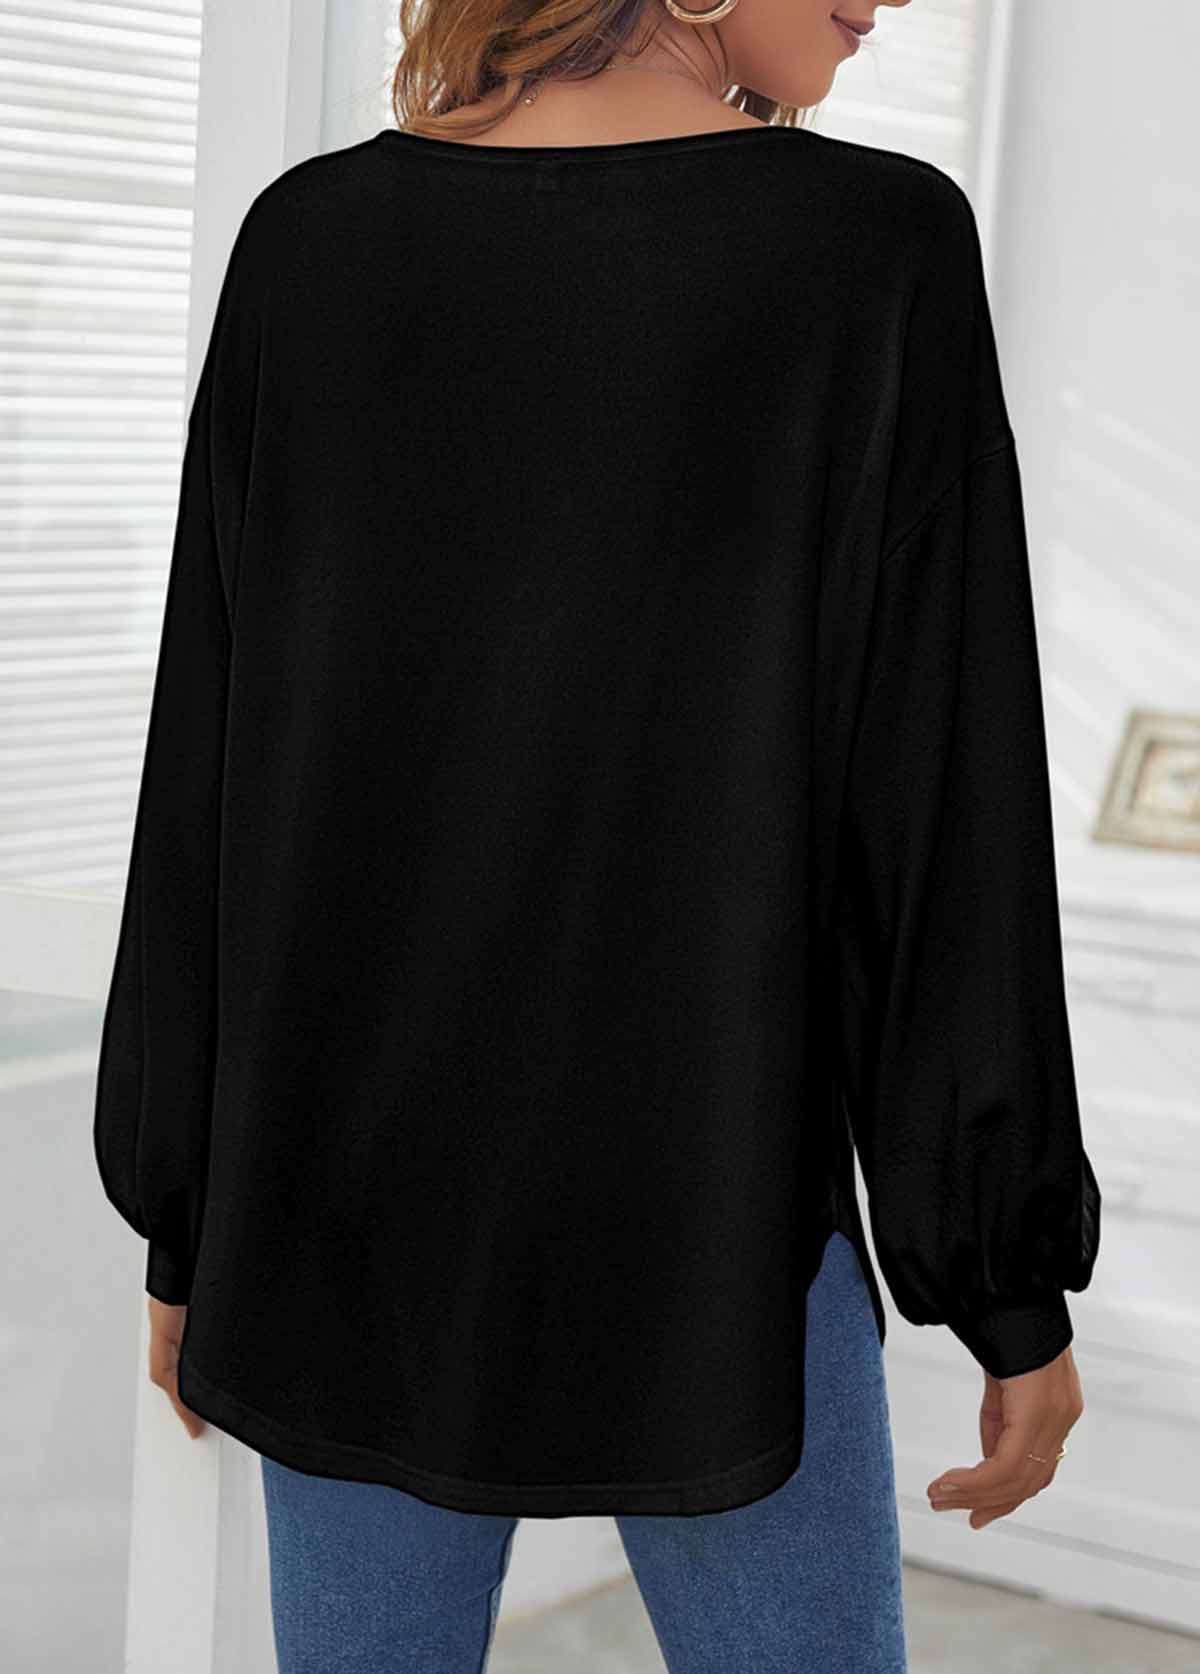 Decorative Button Long Sleeve Black T Shirt